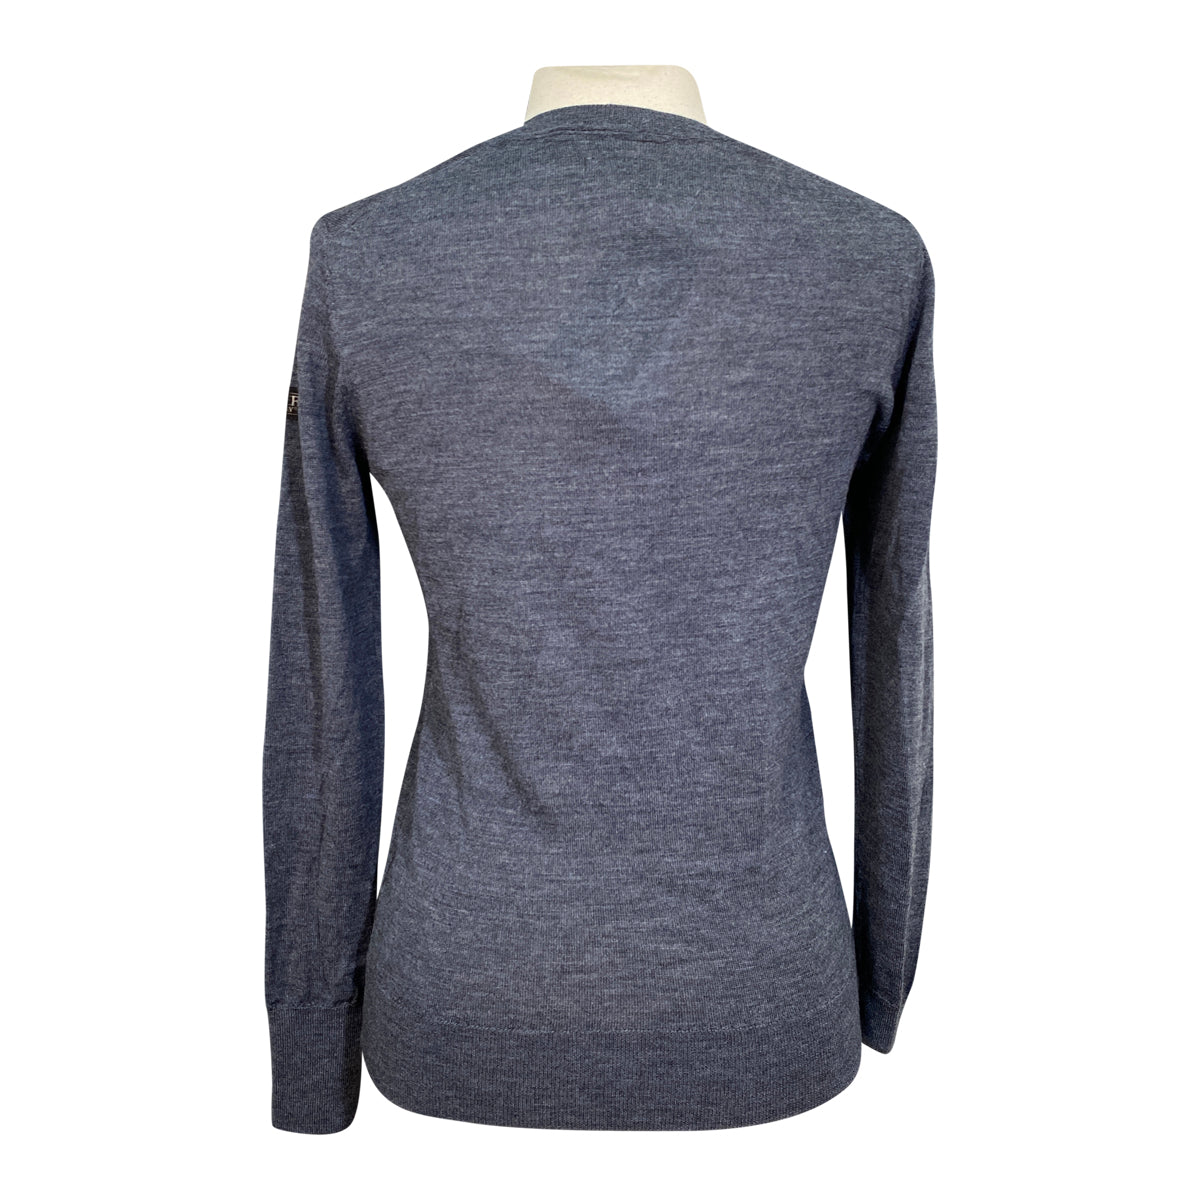 Dover Saddlery Perfect V-Neck Sweater in Charcoal Melange